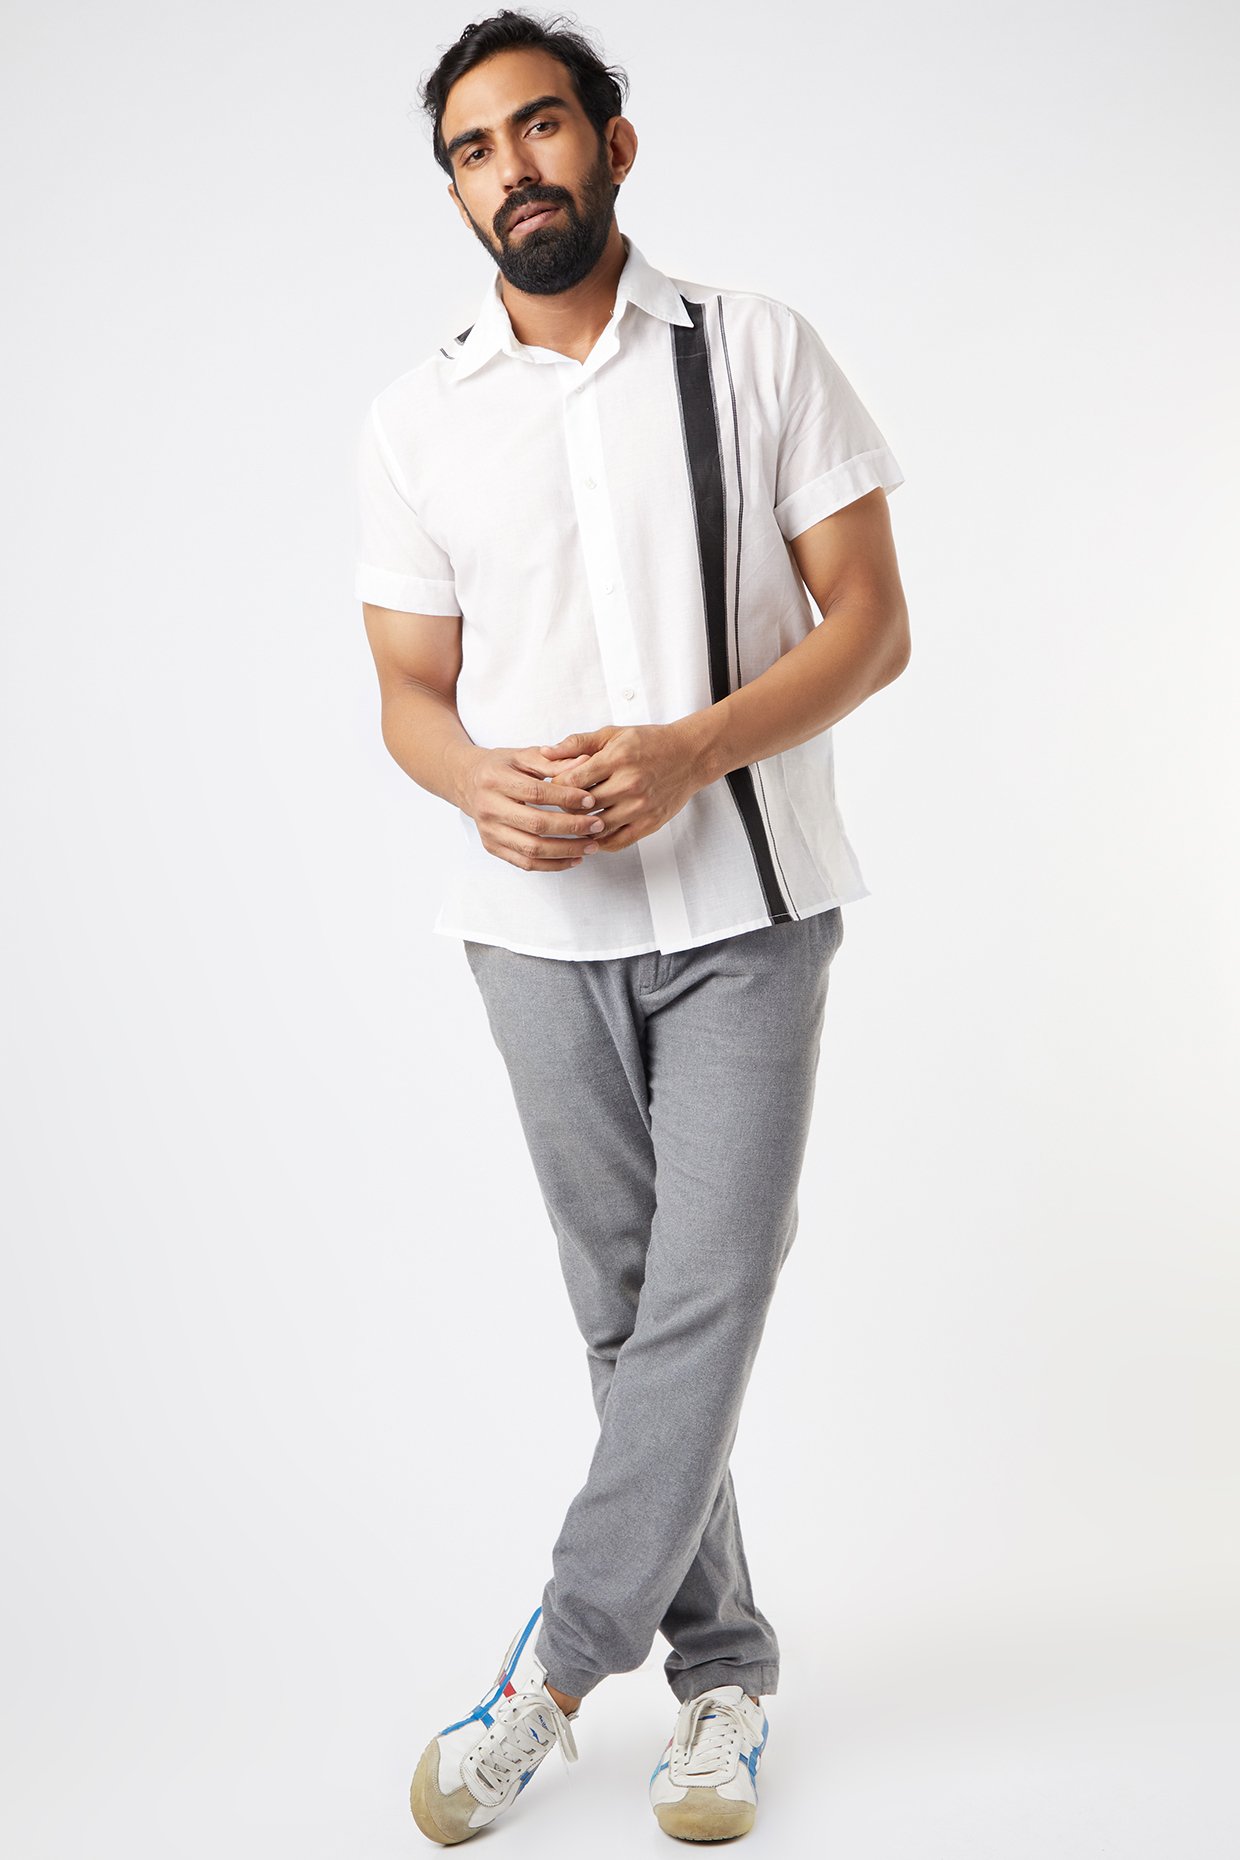 Check styling ideas for「Supima® Cotton V-Neck Short-Sleeve T-Shirt、AirSense  Jacket (Wool Like) (Glen Check) (Ultra Light Jacket)」| UNIQLO US